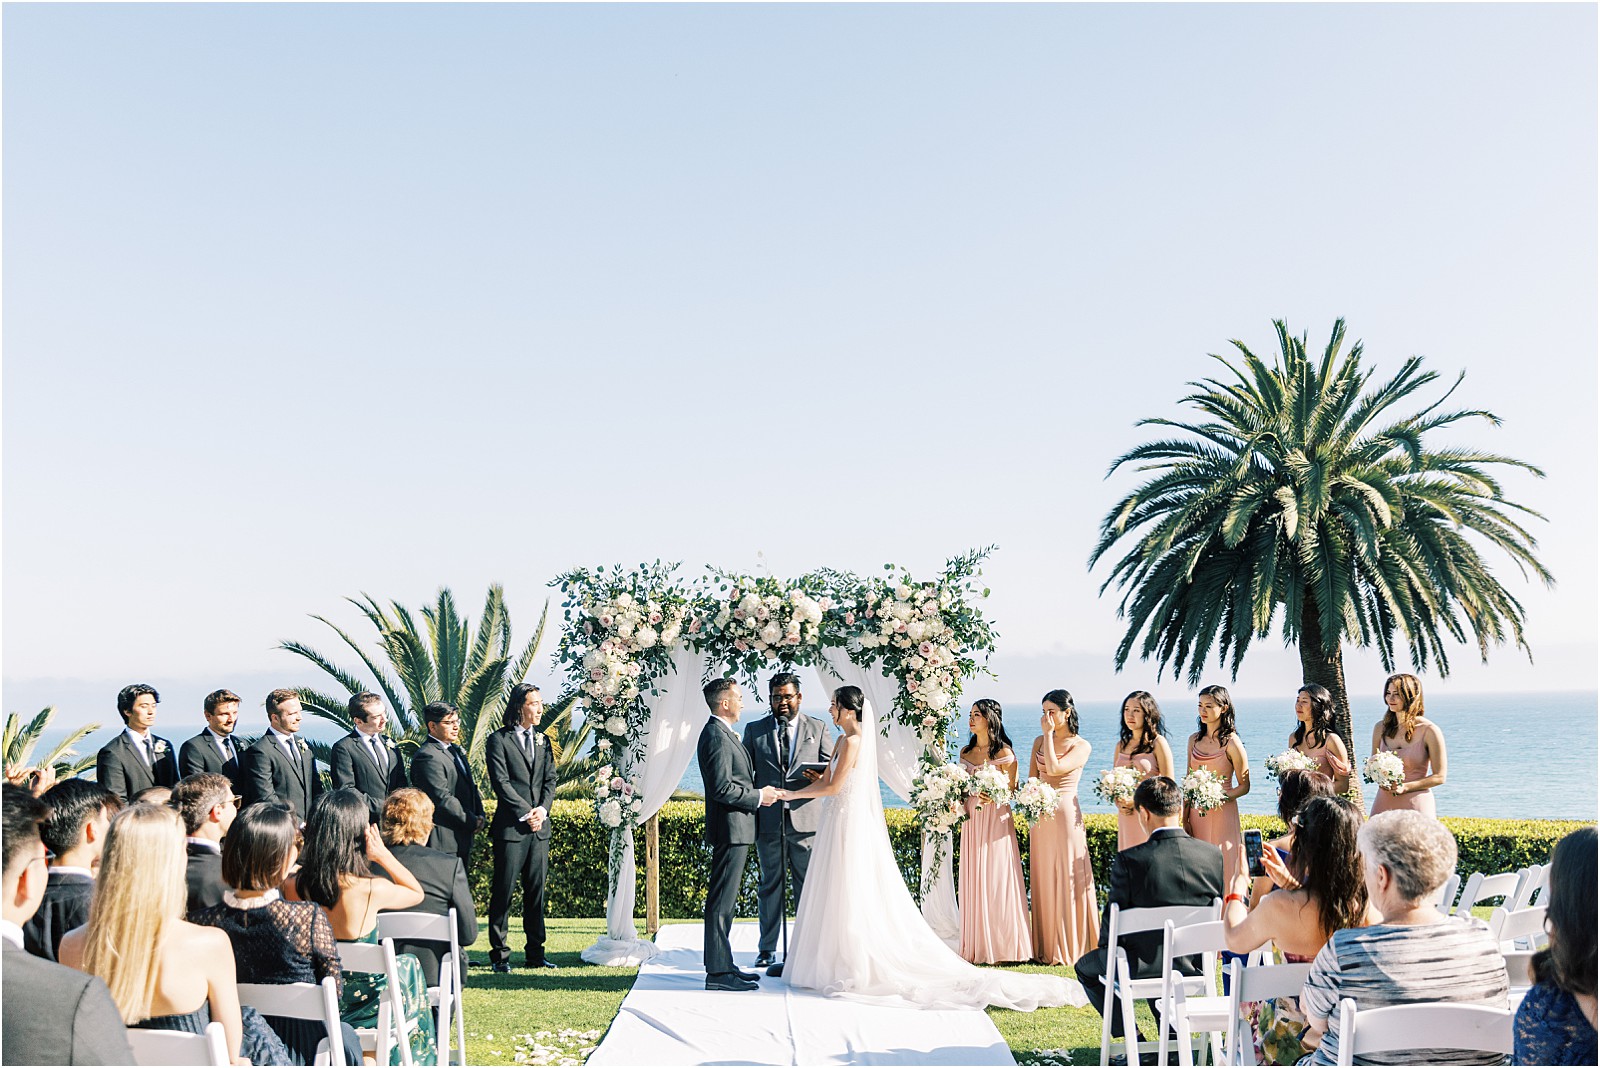 Wedding at Bel Air Bay Club in Pacific Palisades, Ca.